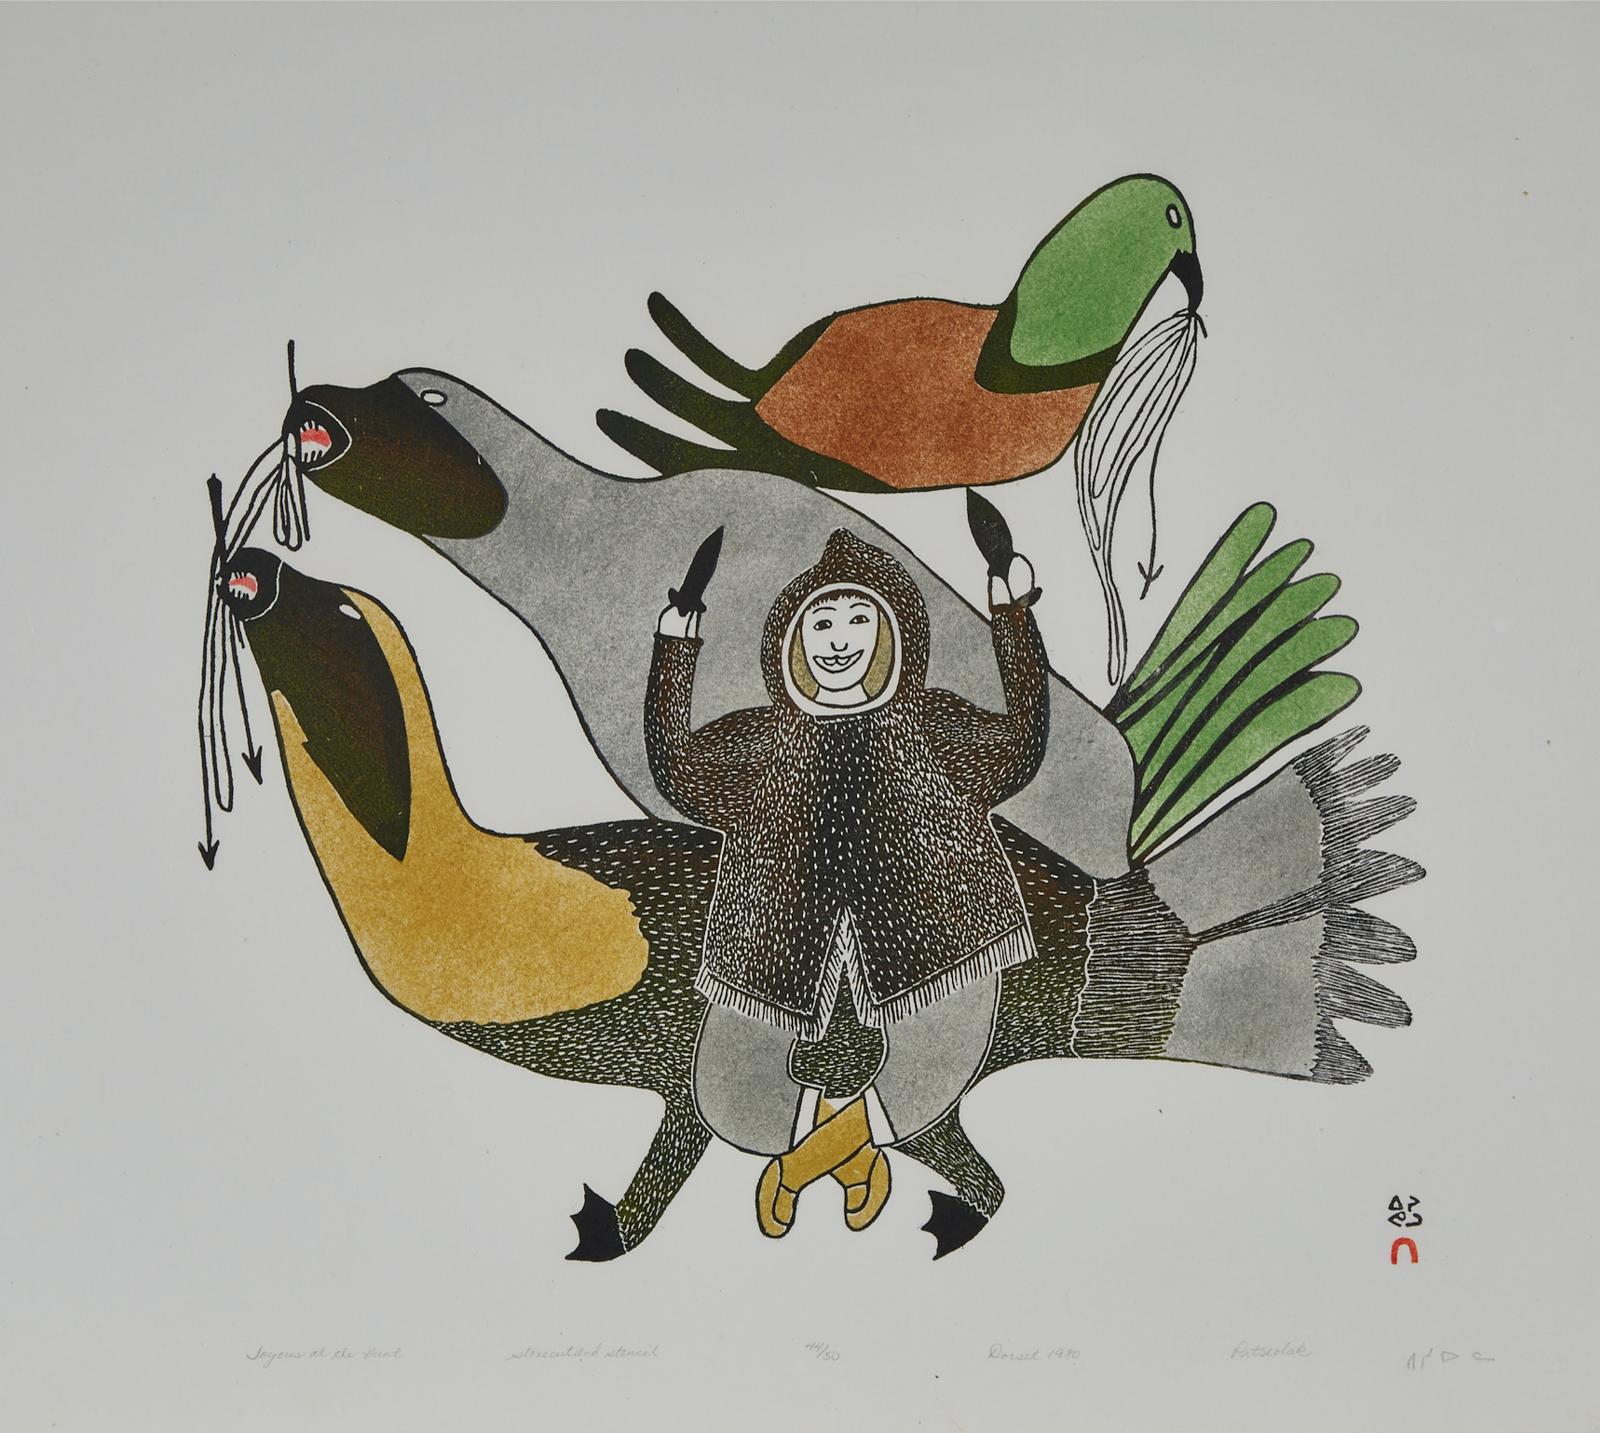 Pitseolak Ashoona (1904-1983) - Joyous At The Hunt